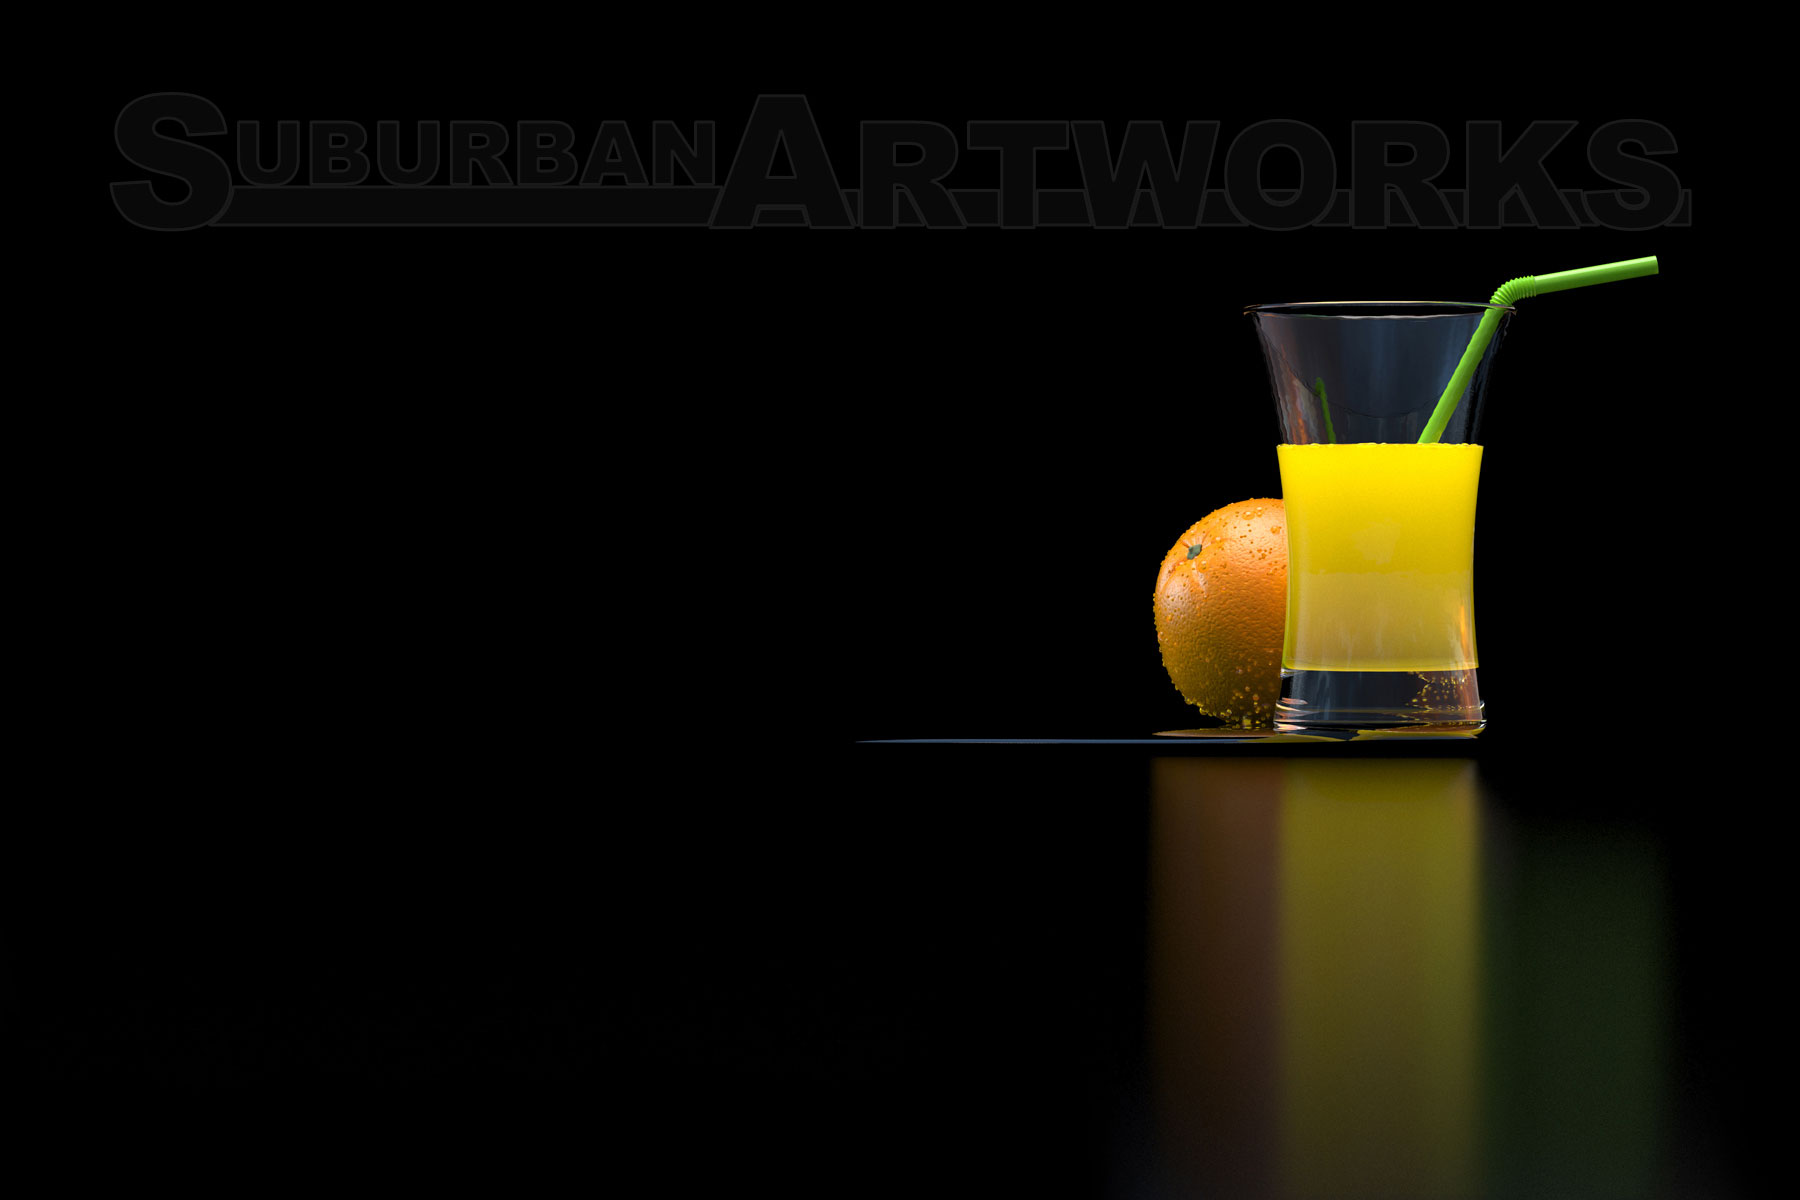 3d rendering of a glass of orange juice